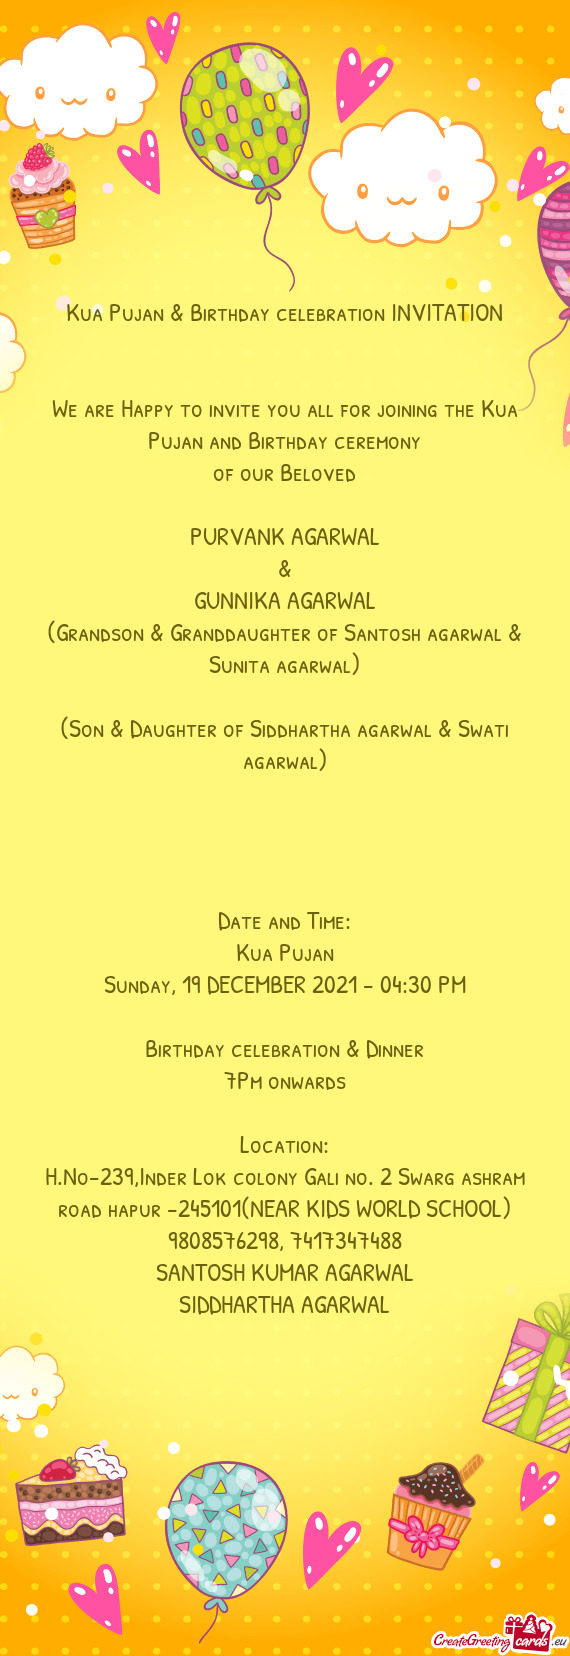 (Grandson & Granddaughter of Santosh agarwal & Sunita agarwal)